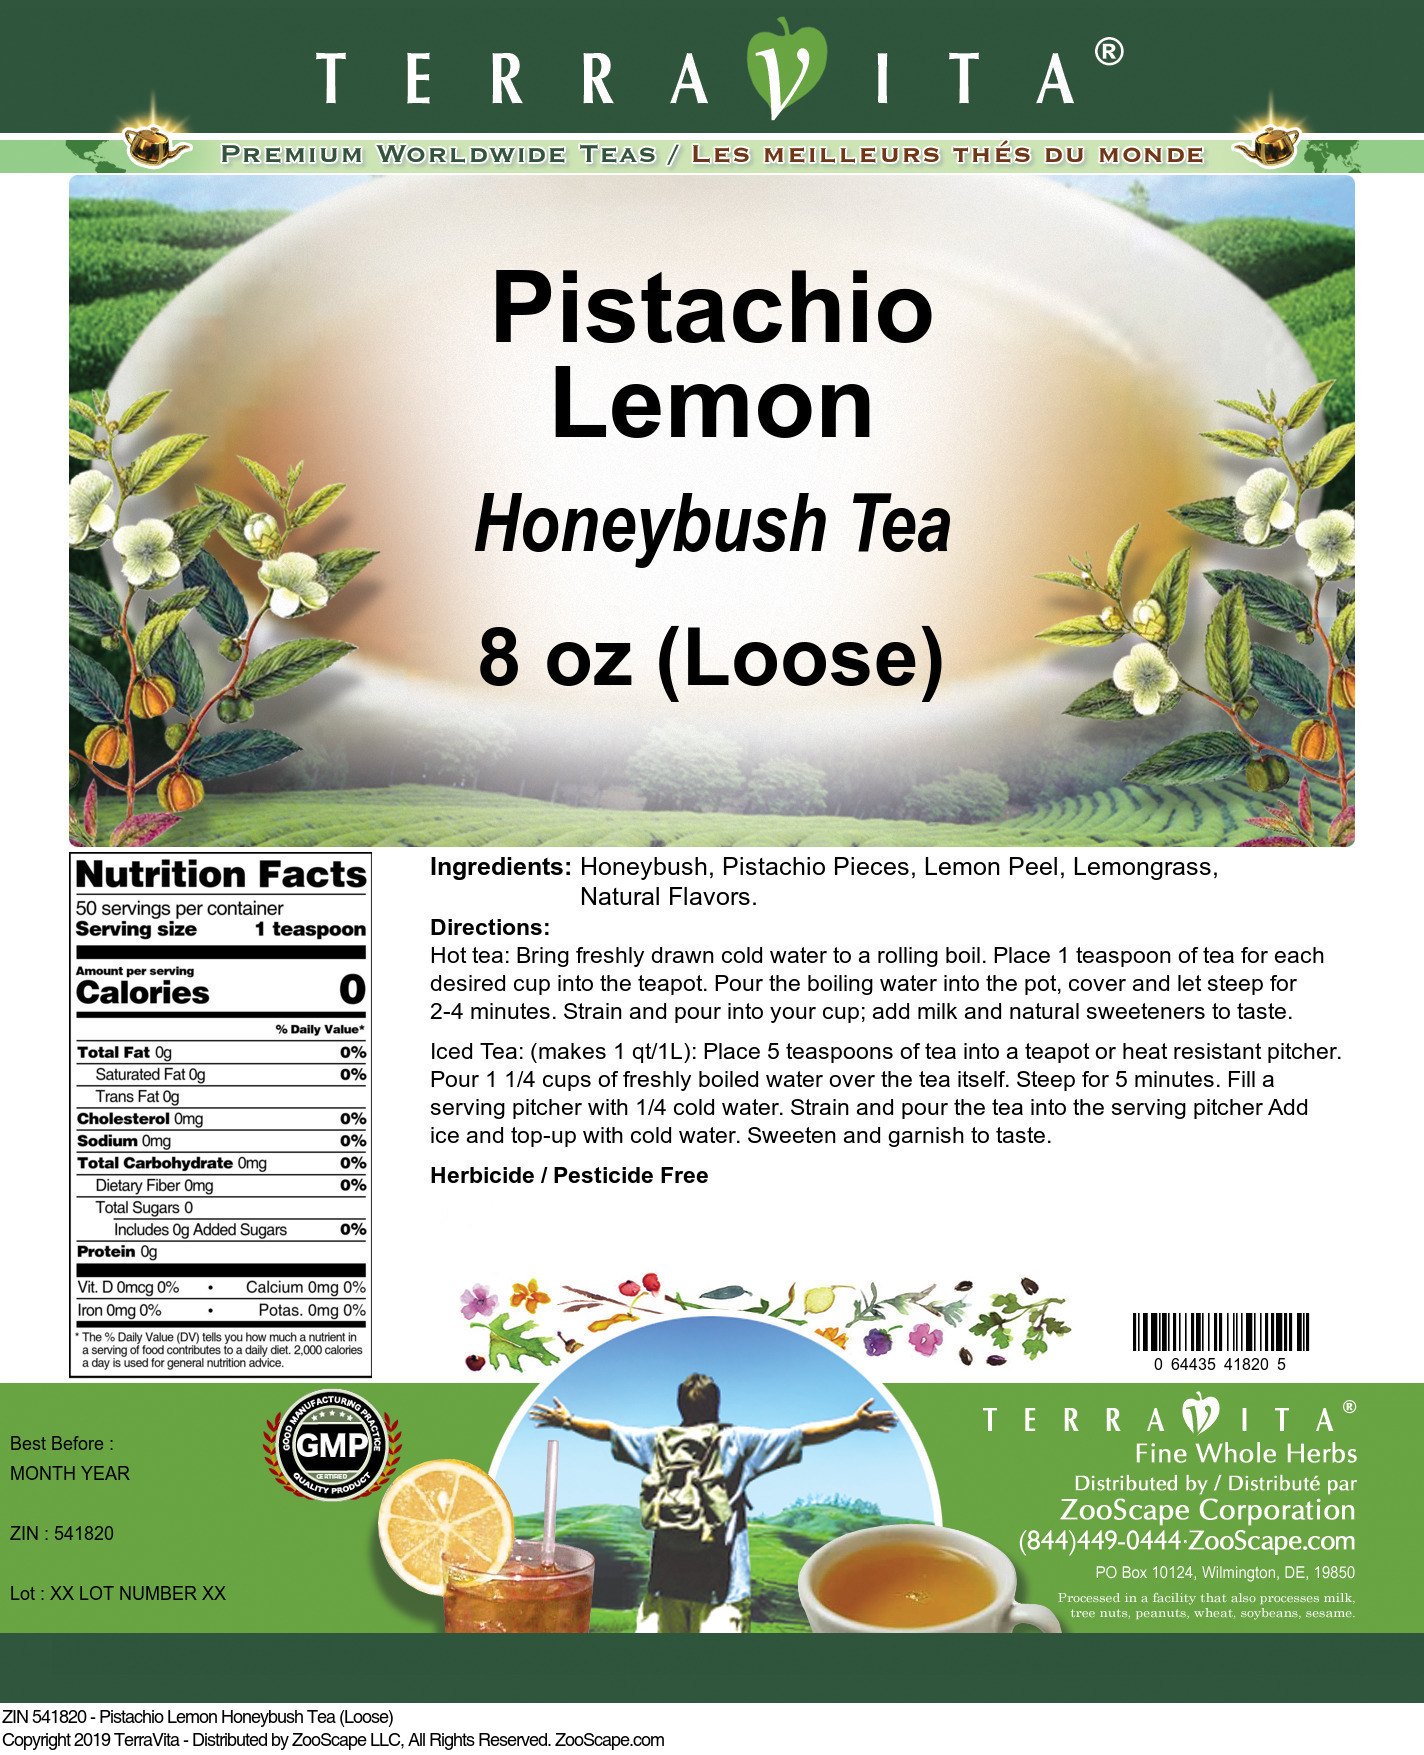 Pistachio Lemon Honeybush Tea (Loose) - Label